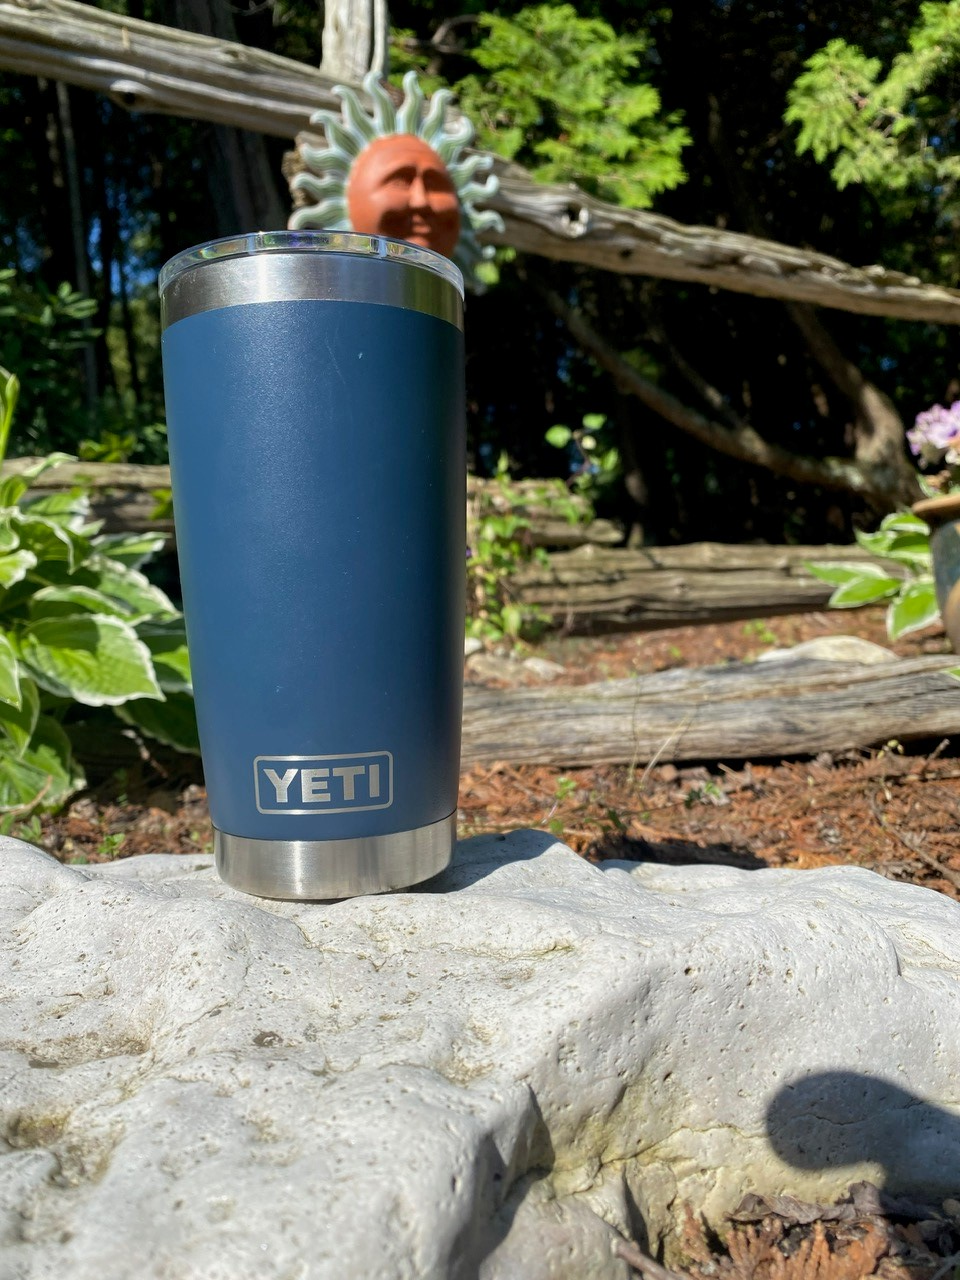 YETI Rambler Tumbler 20 oz - Great way to start morning coffee in the garden.